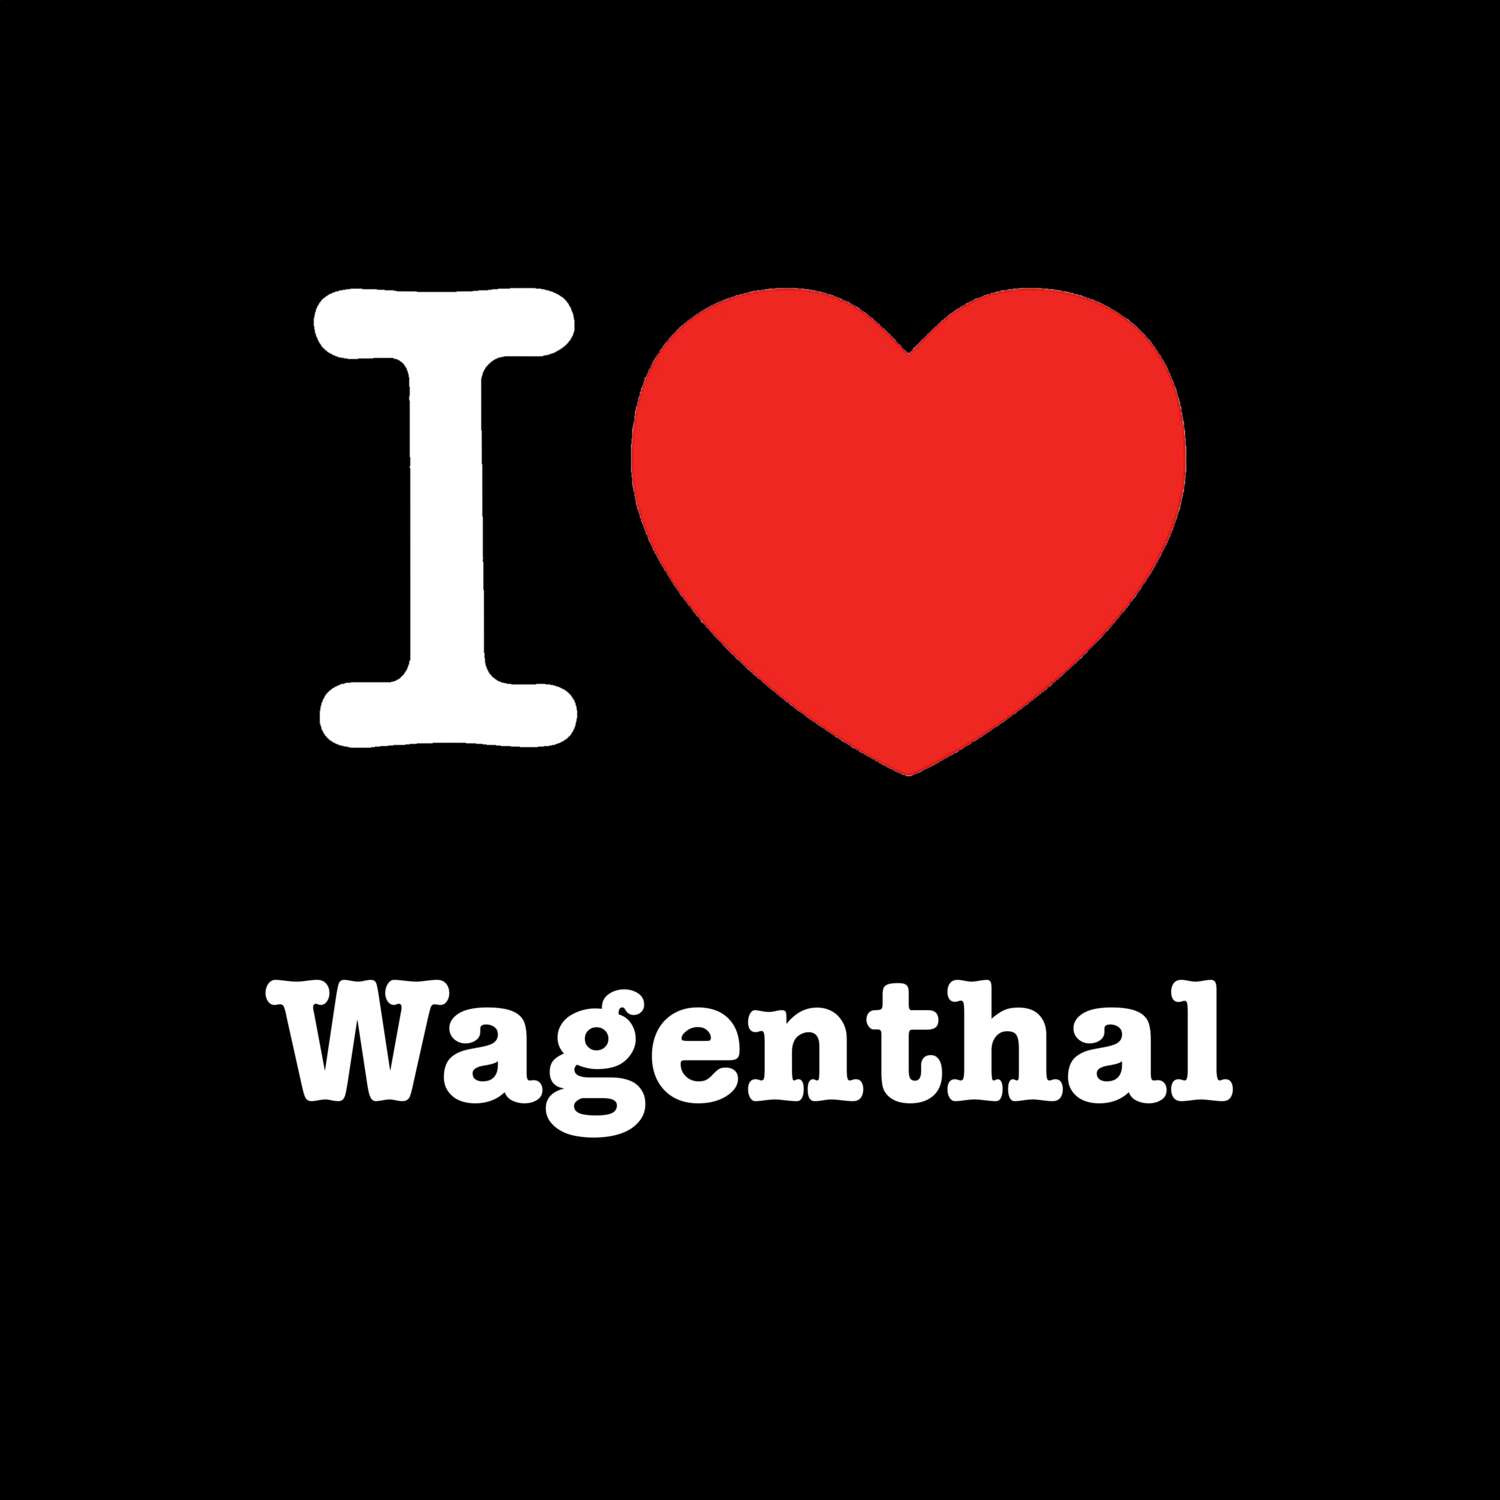 Wagenthal T-Shirt »I love«